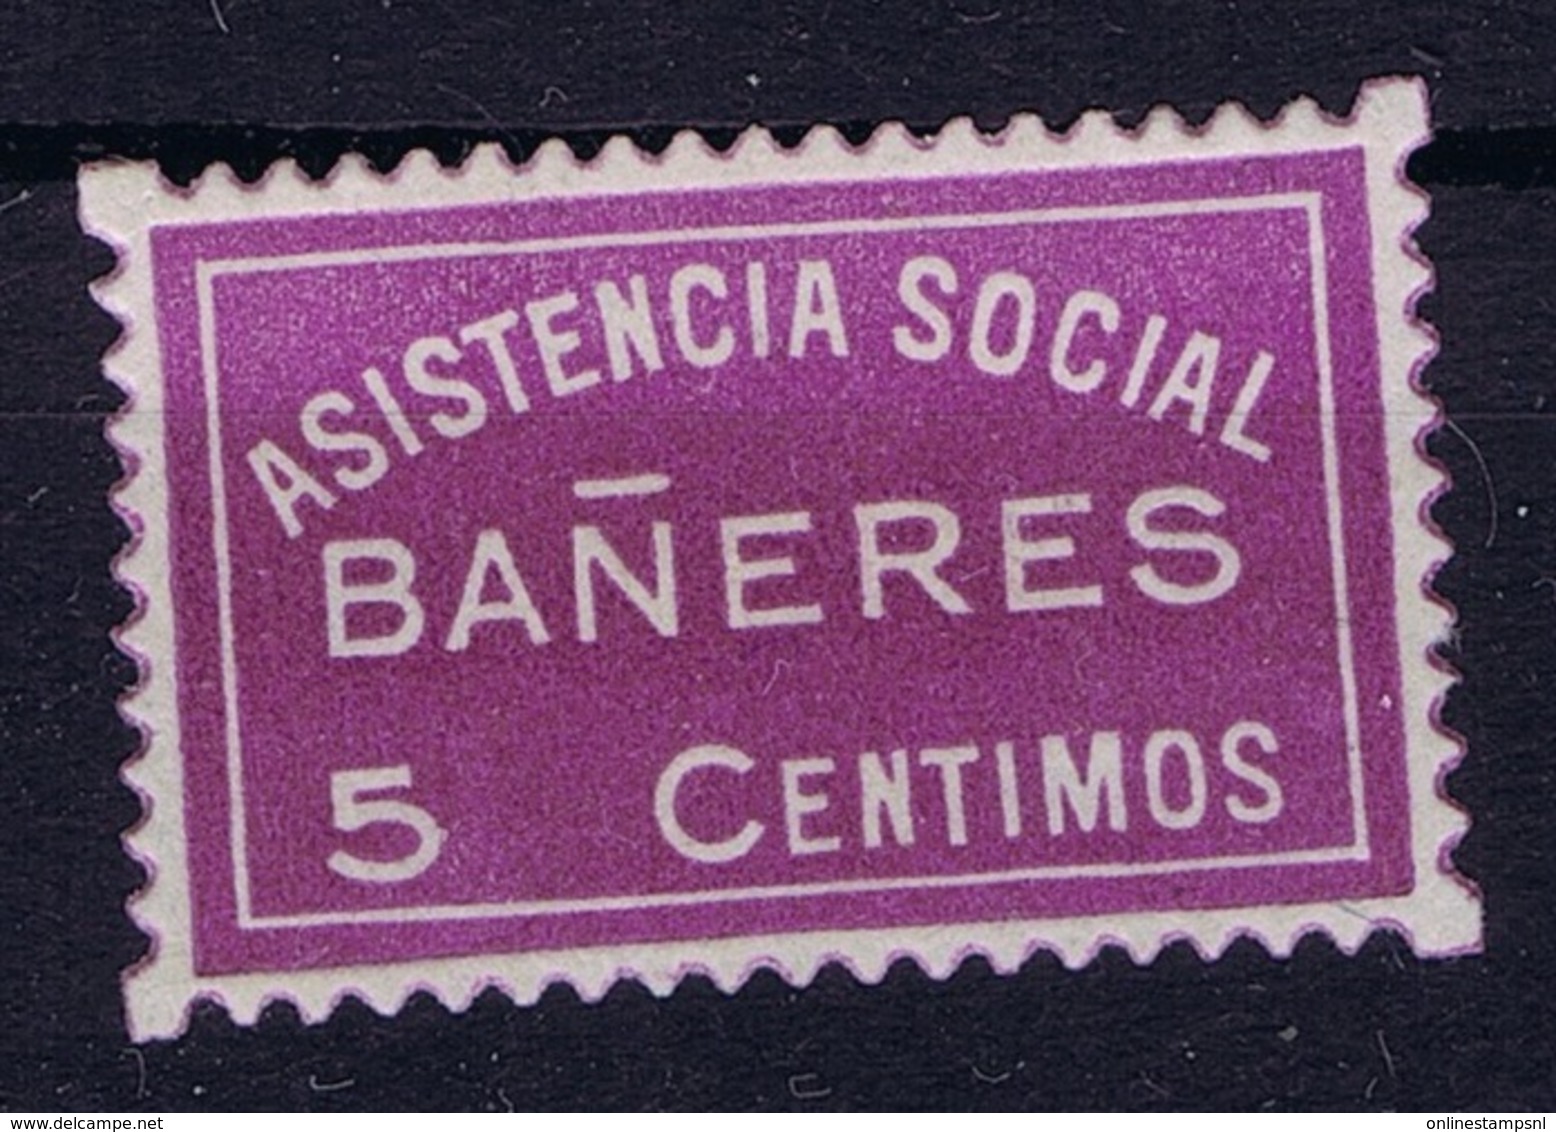 Spian : Asistencia Social Baneres - Spanish Civil War Labels